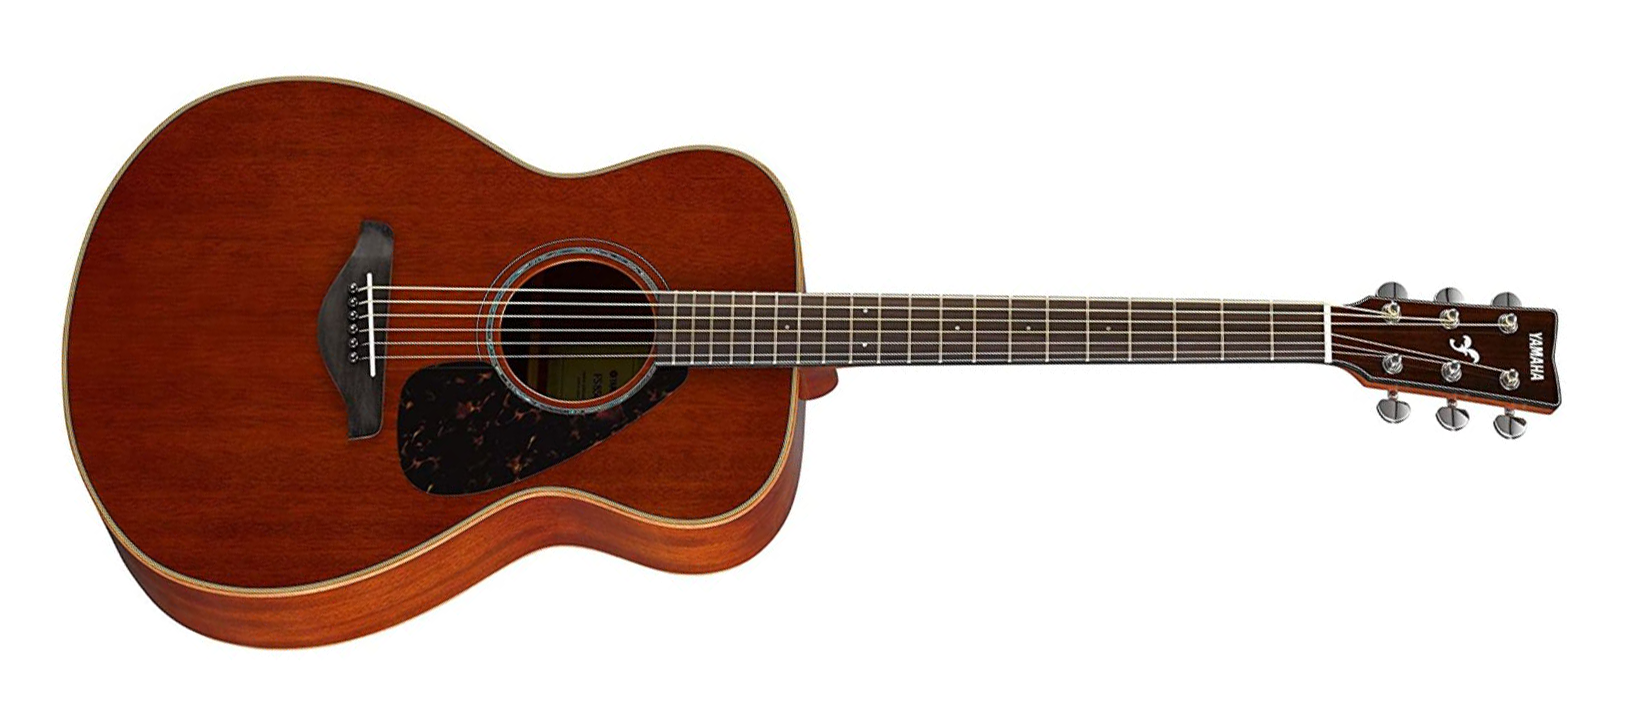 Yamaha FS850 FS Series 6-String RH Acoustic Guitar-Natural